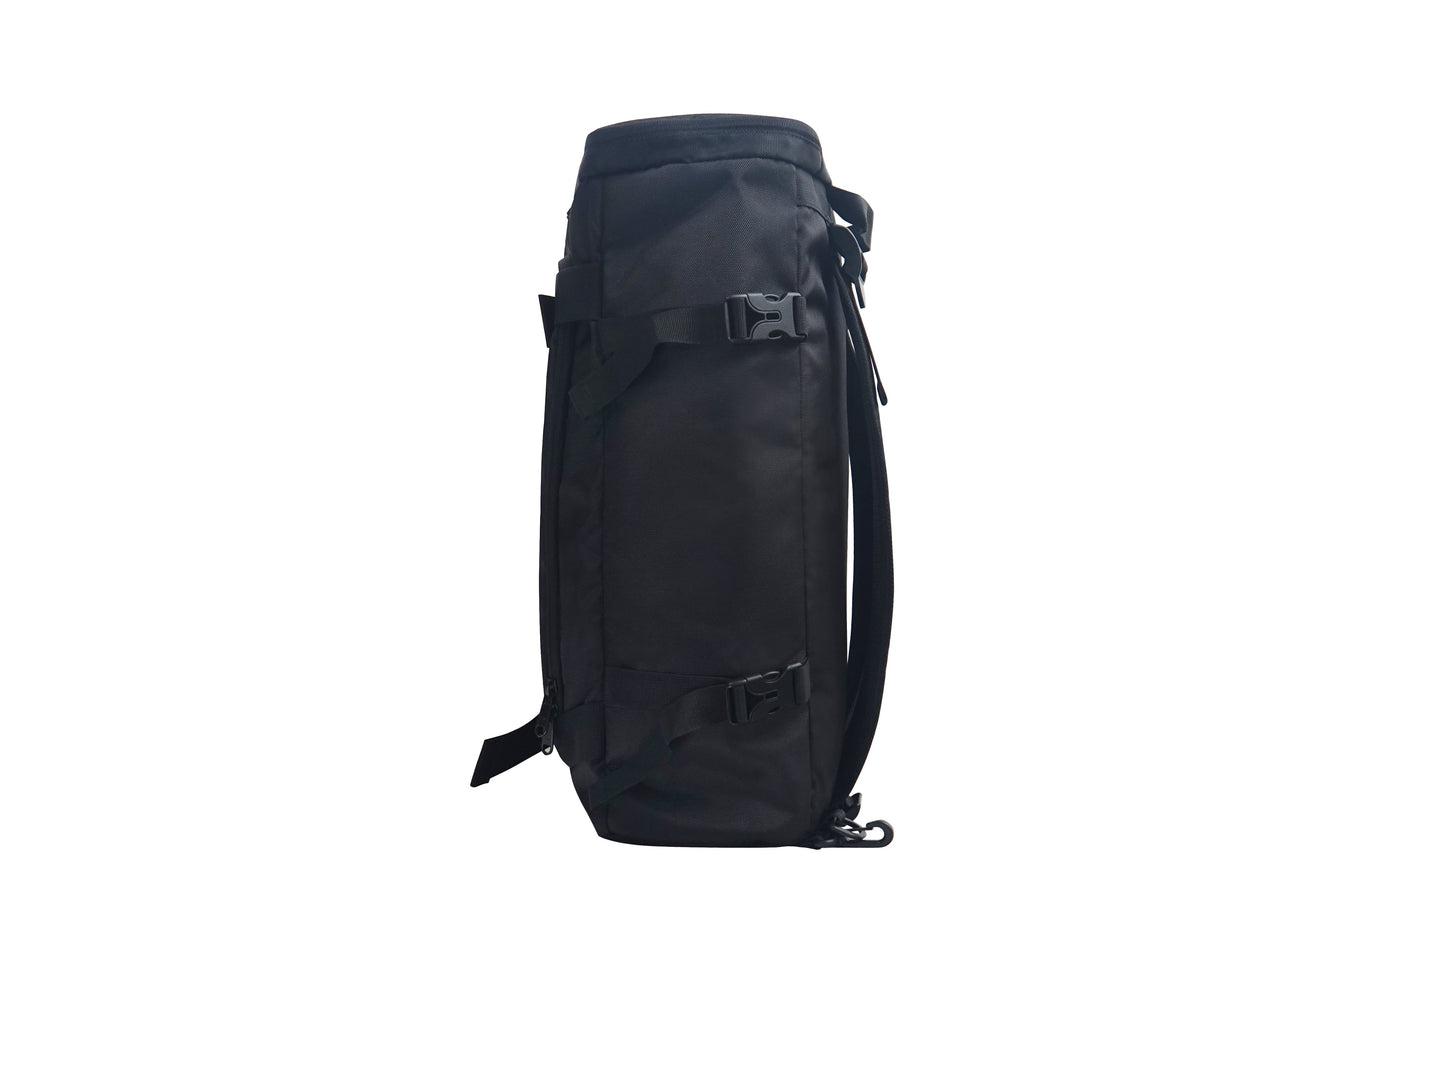 Cheltenham HC - Accra Backpack - Black